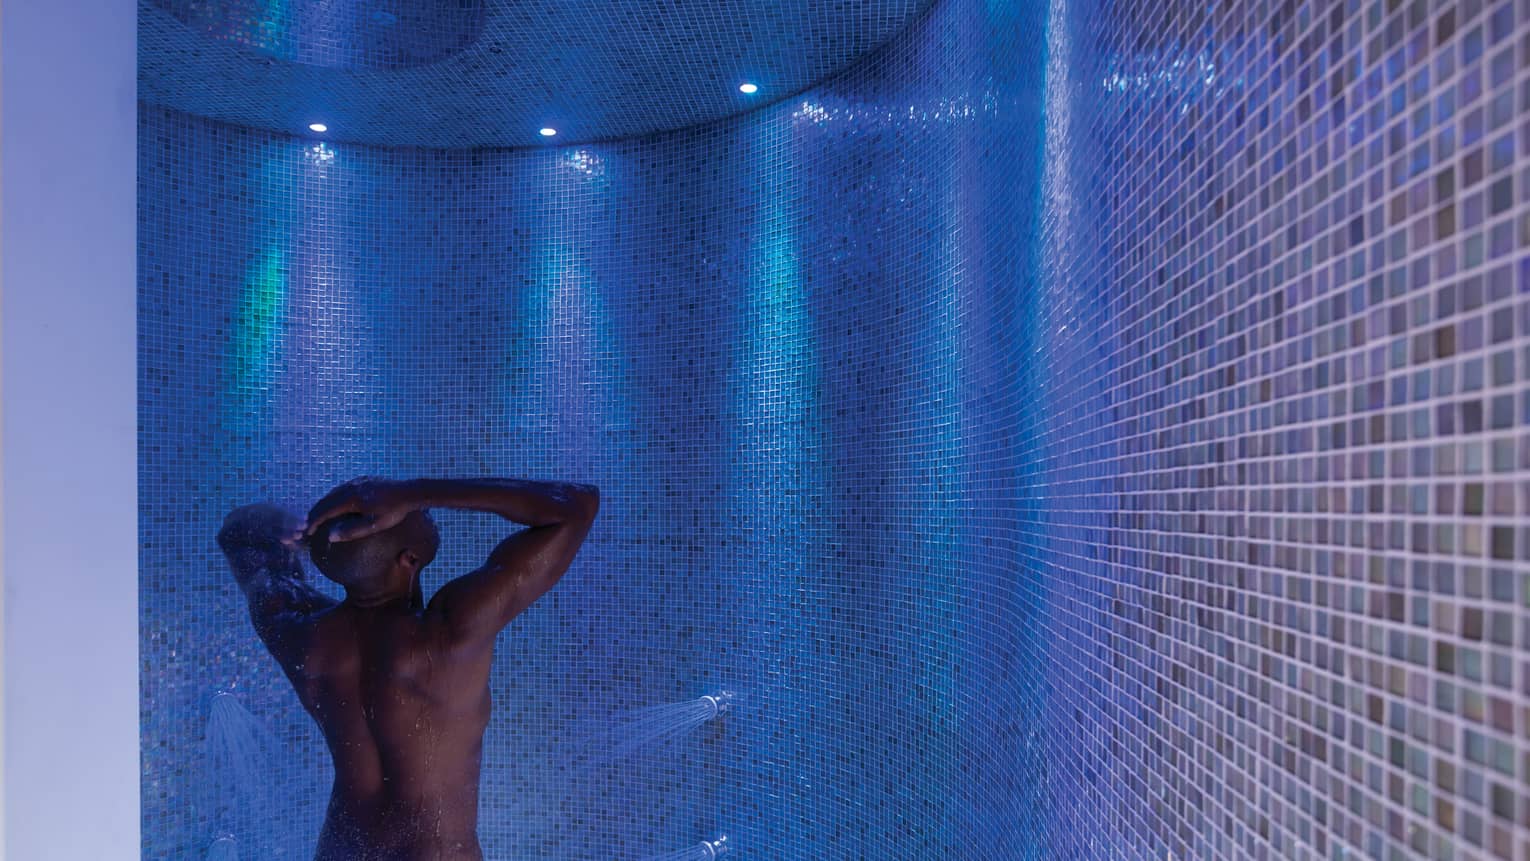 Man rinses off in tile spa shower under blue, purple lights